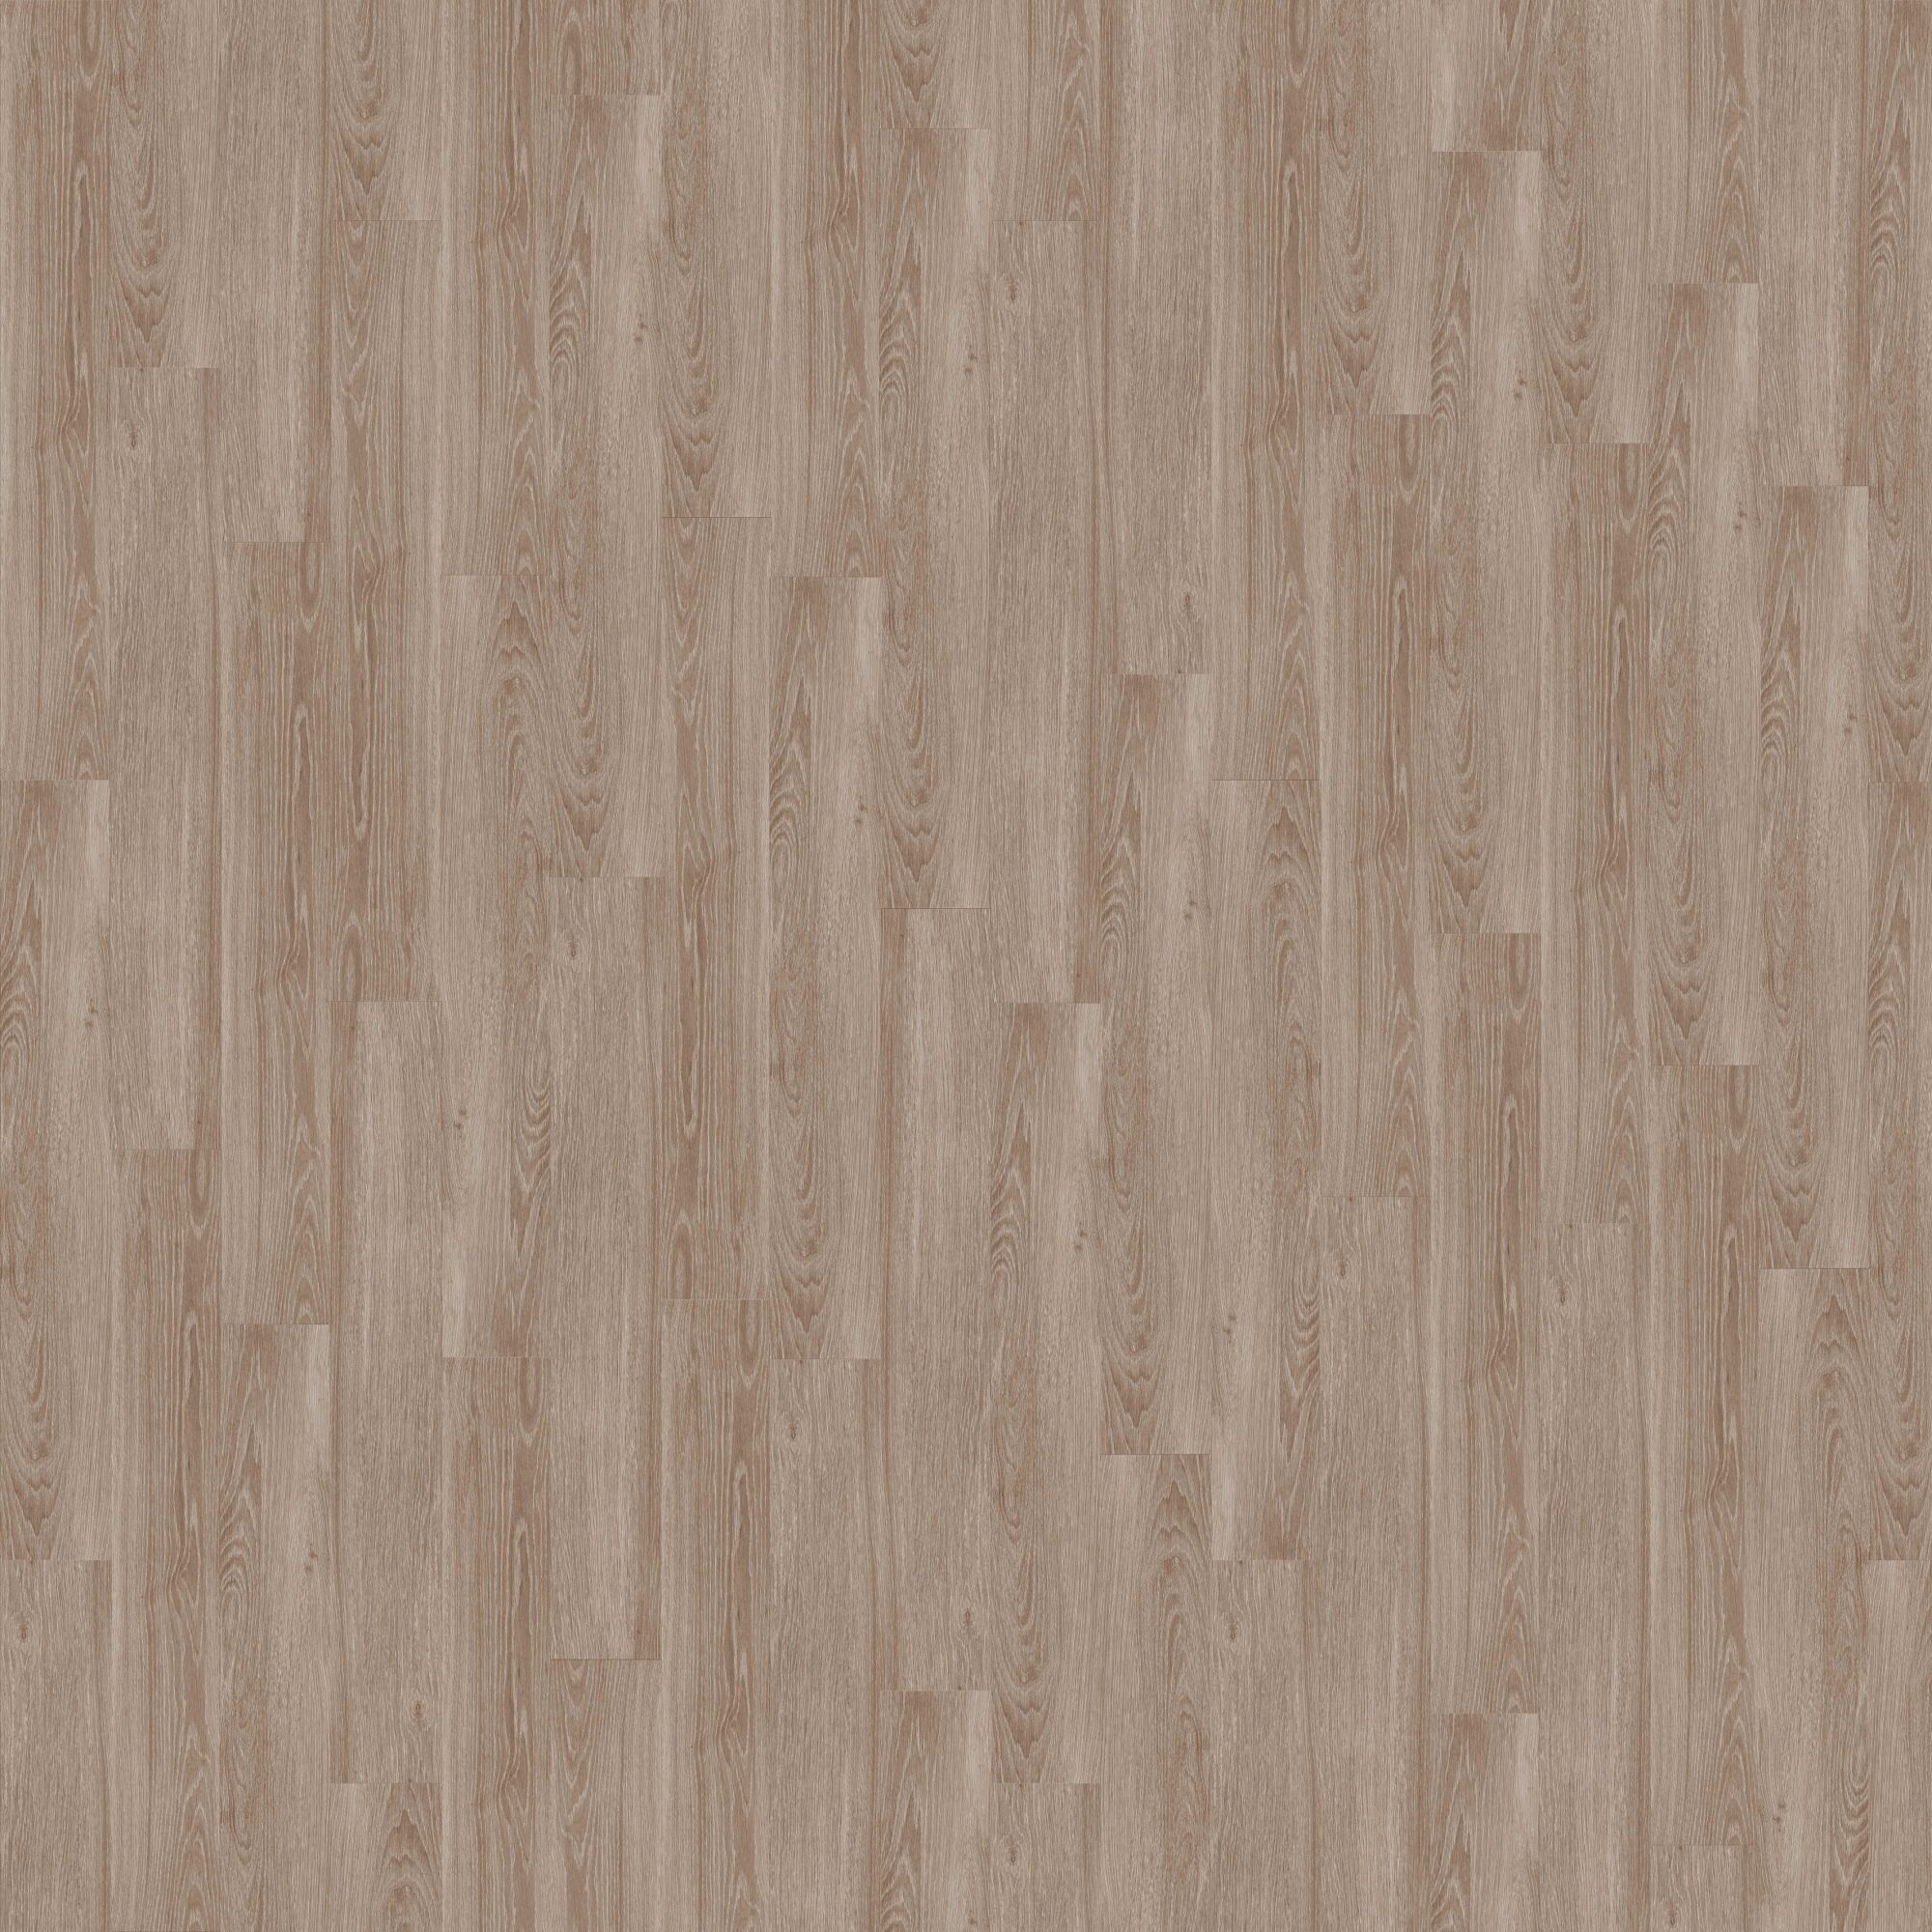 French Oak Almond Invictus Maximus, Almond Oak Laminate Flooring